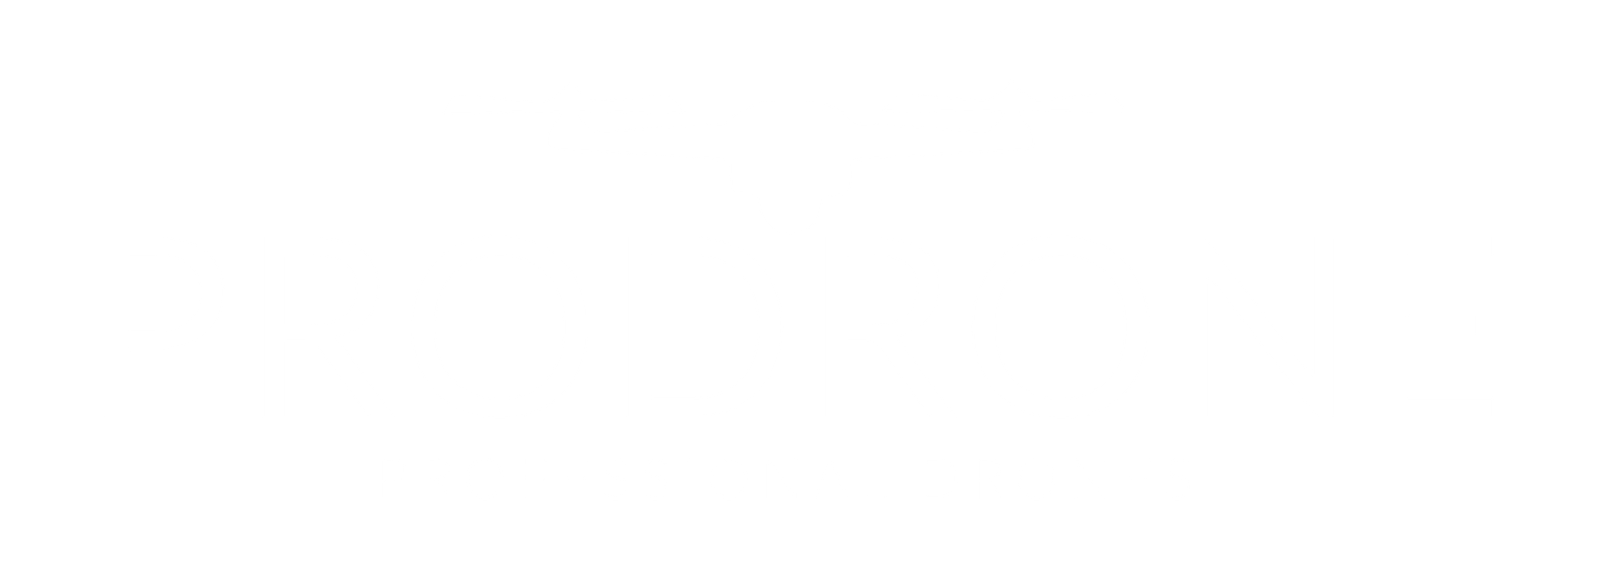 prodrone professional drones